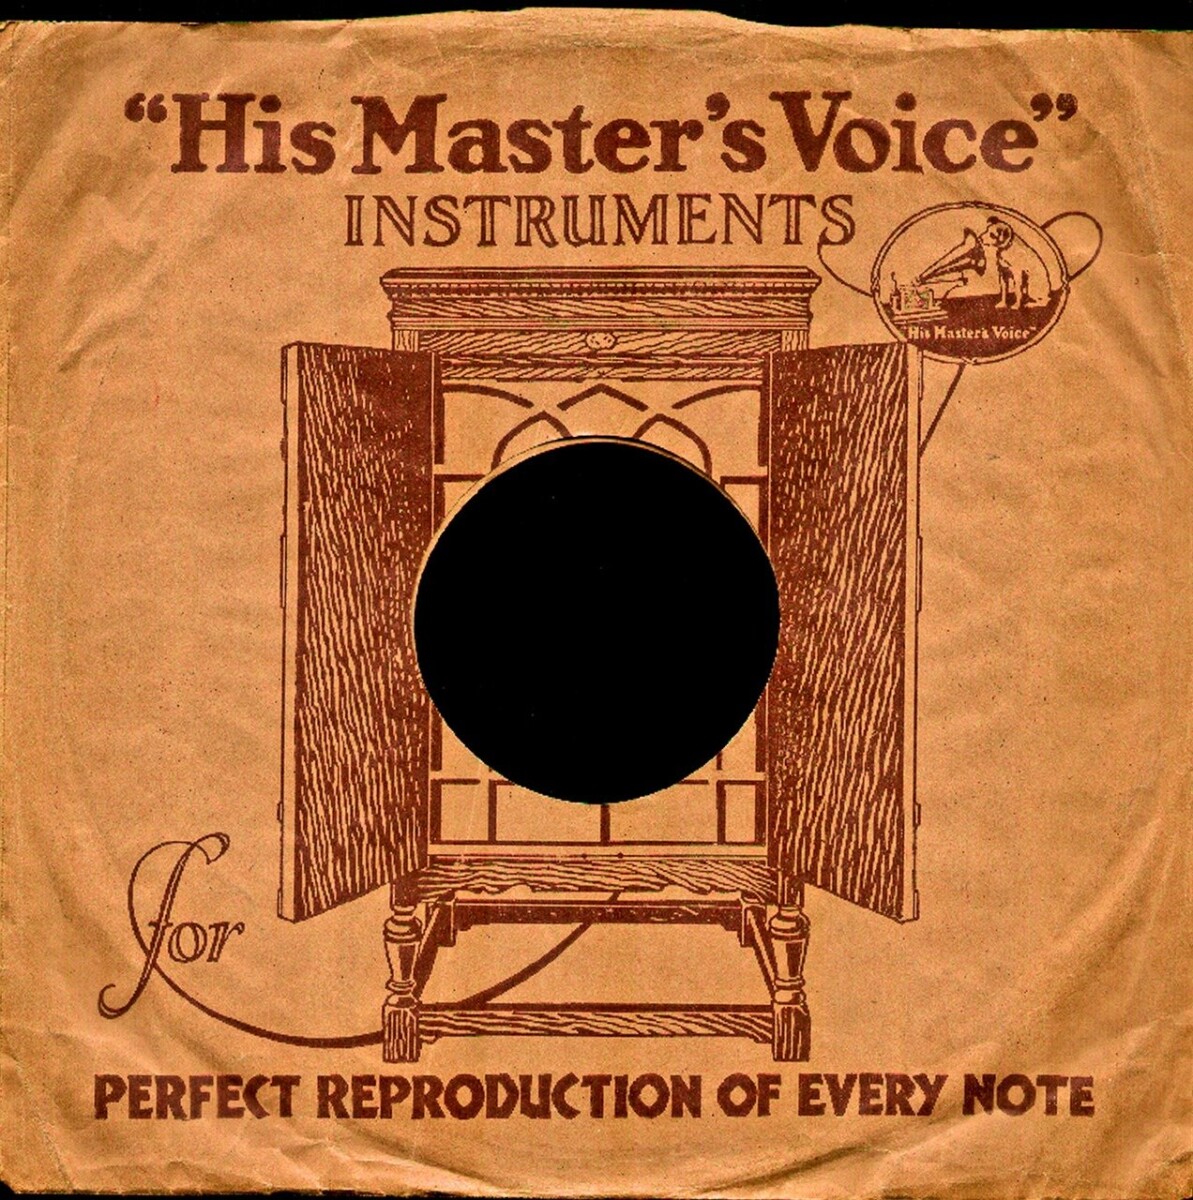 His Master's Voice - record sleeve. Photo: Pixabay